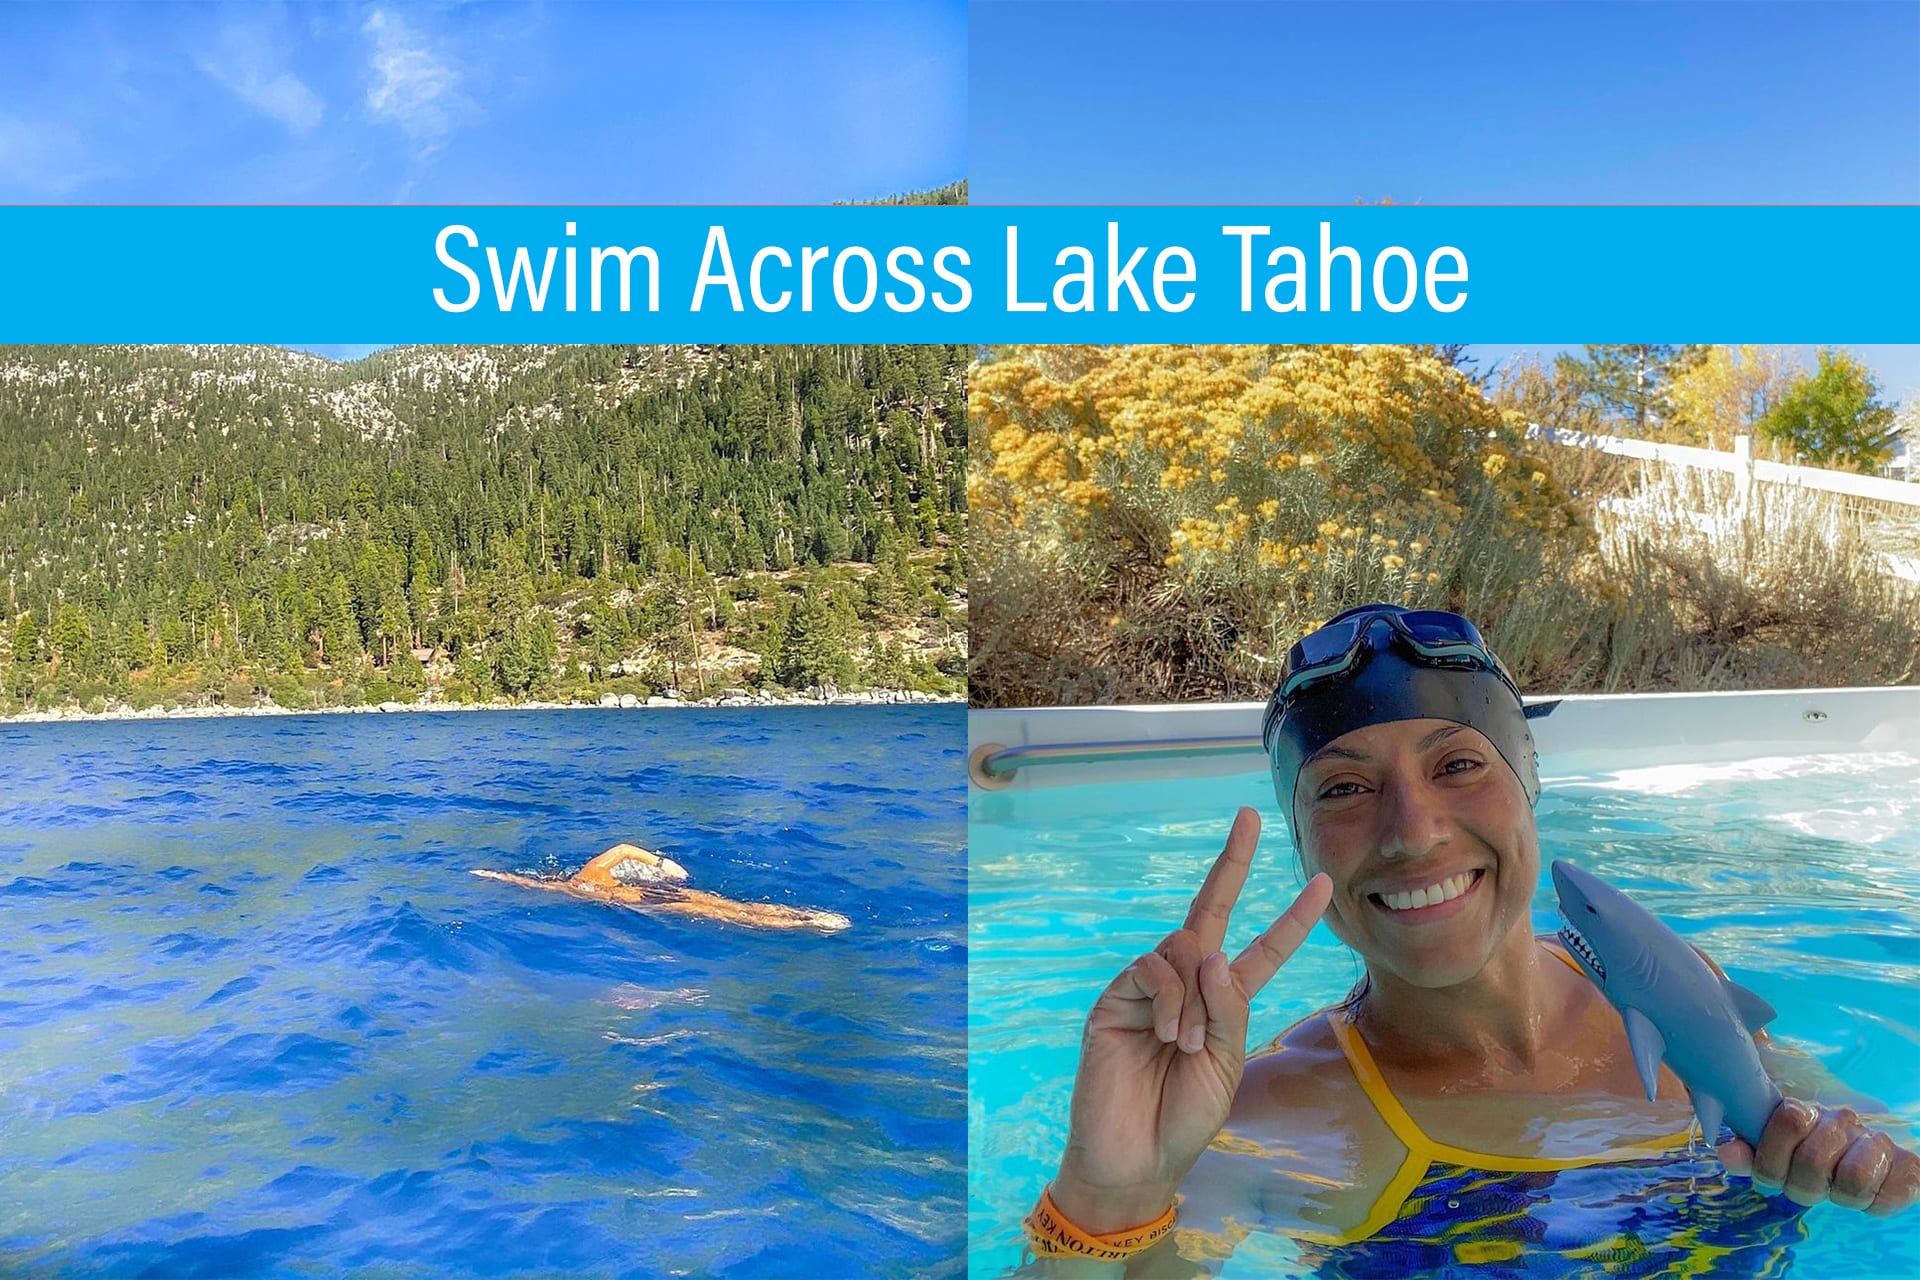 Swim Across Lake Tahoe – One Woman’s Journey Begins in an Endless Pool